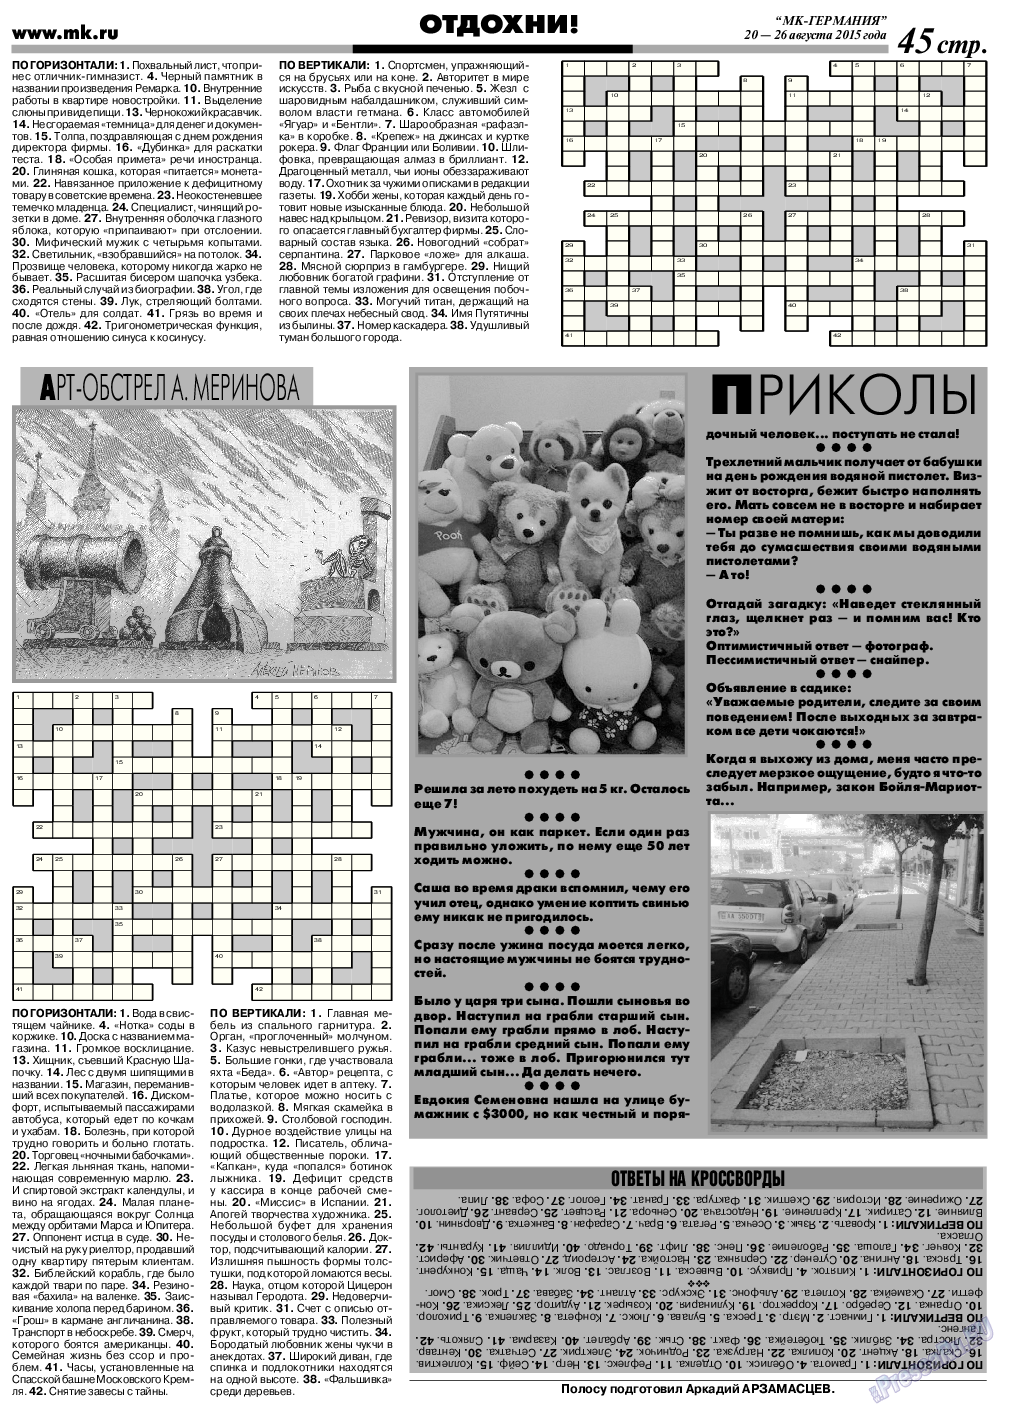 МК-Германия, газета. 2015 №34 стр.45